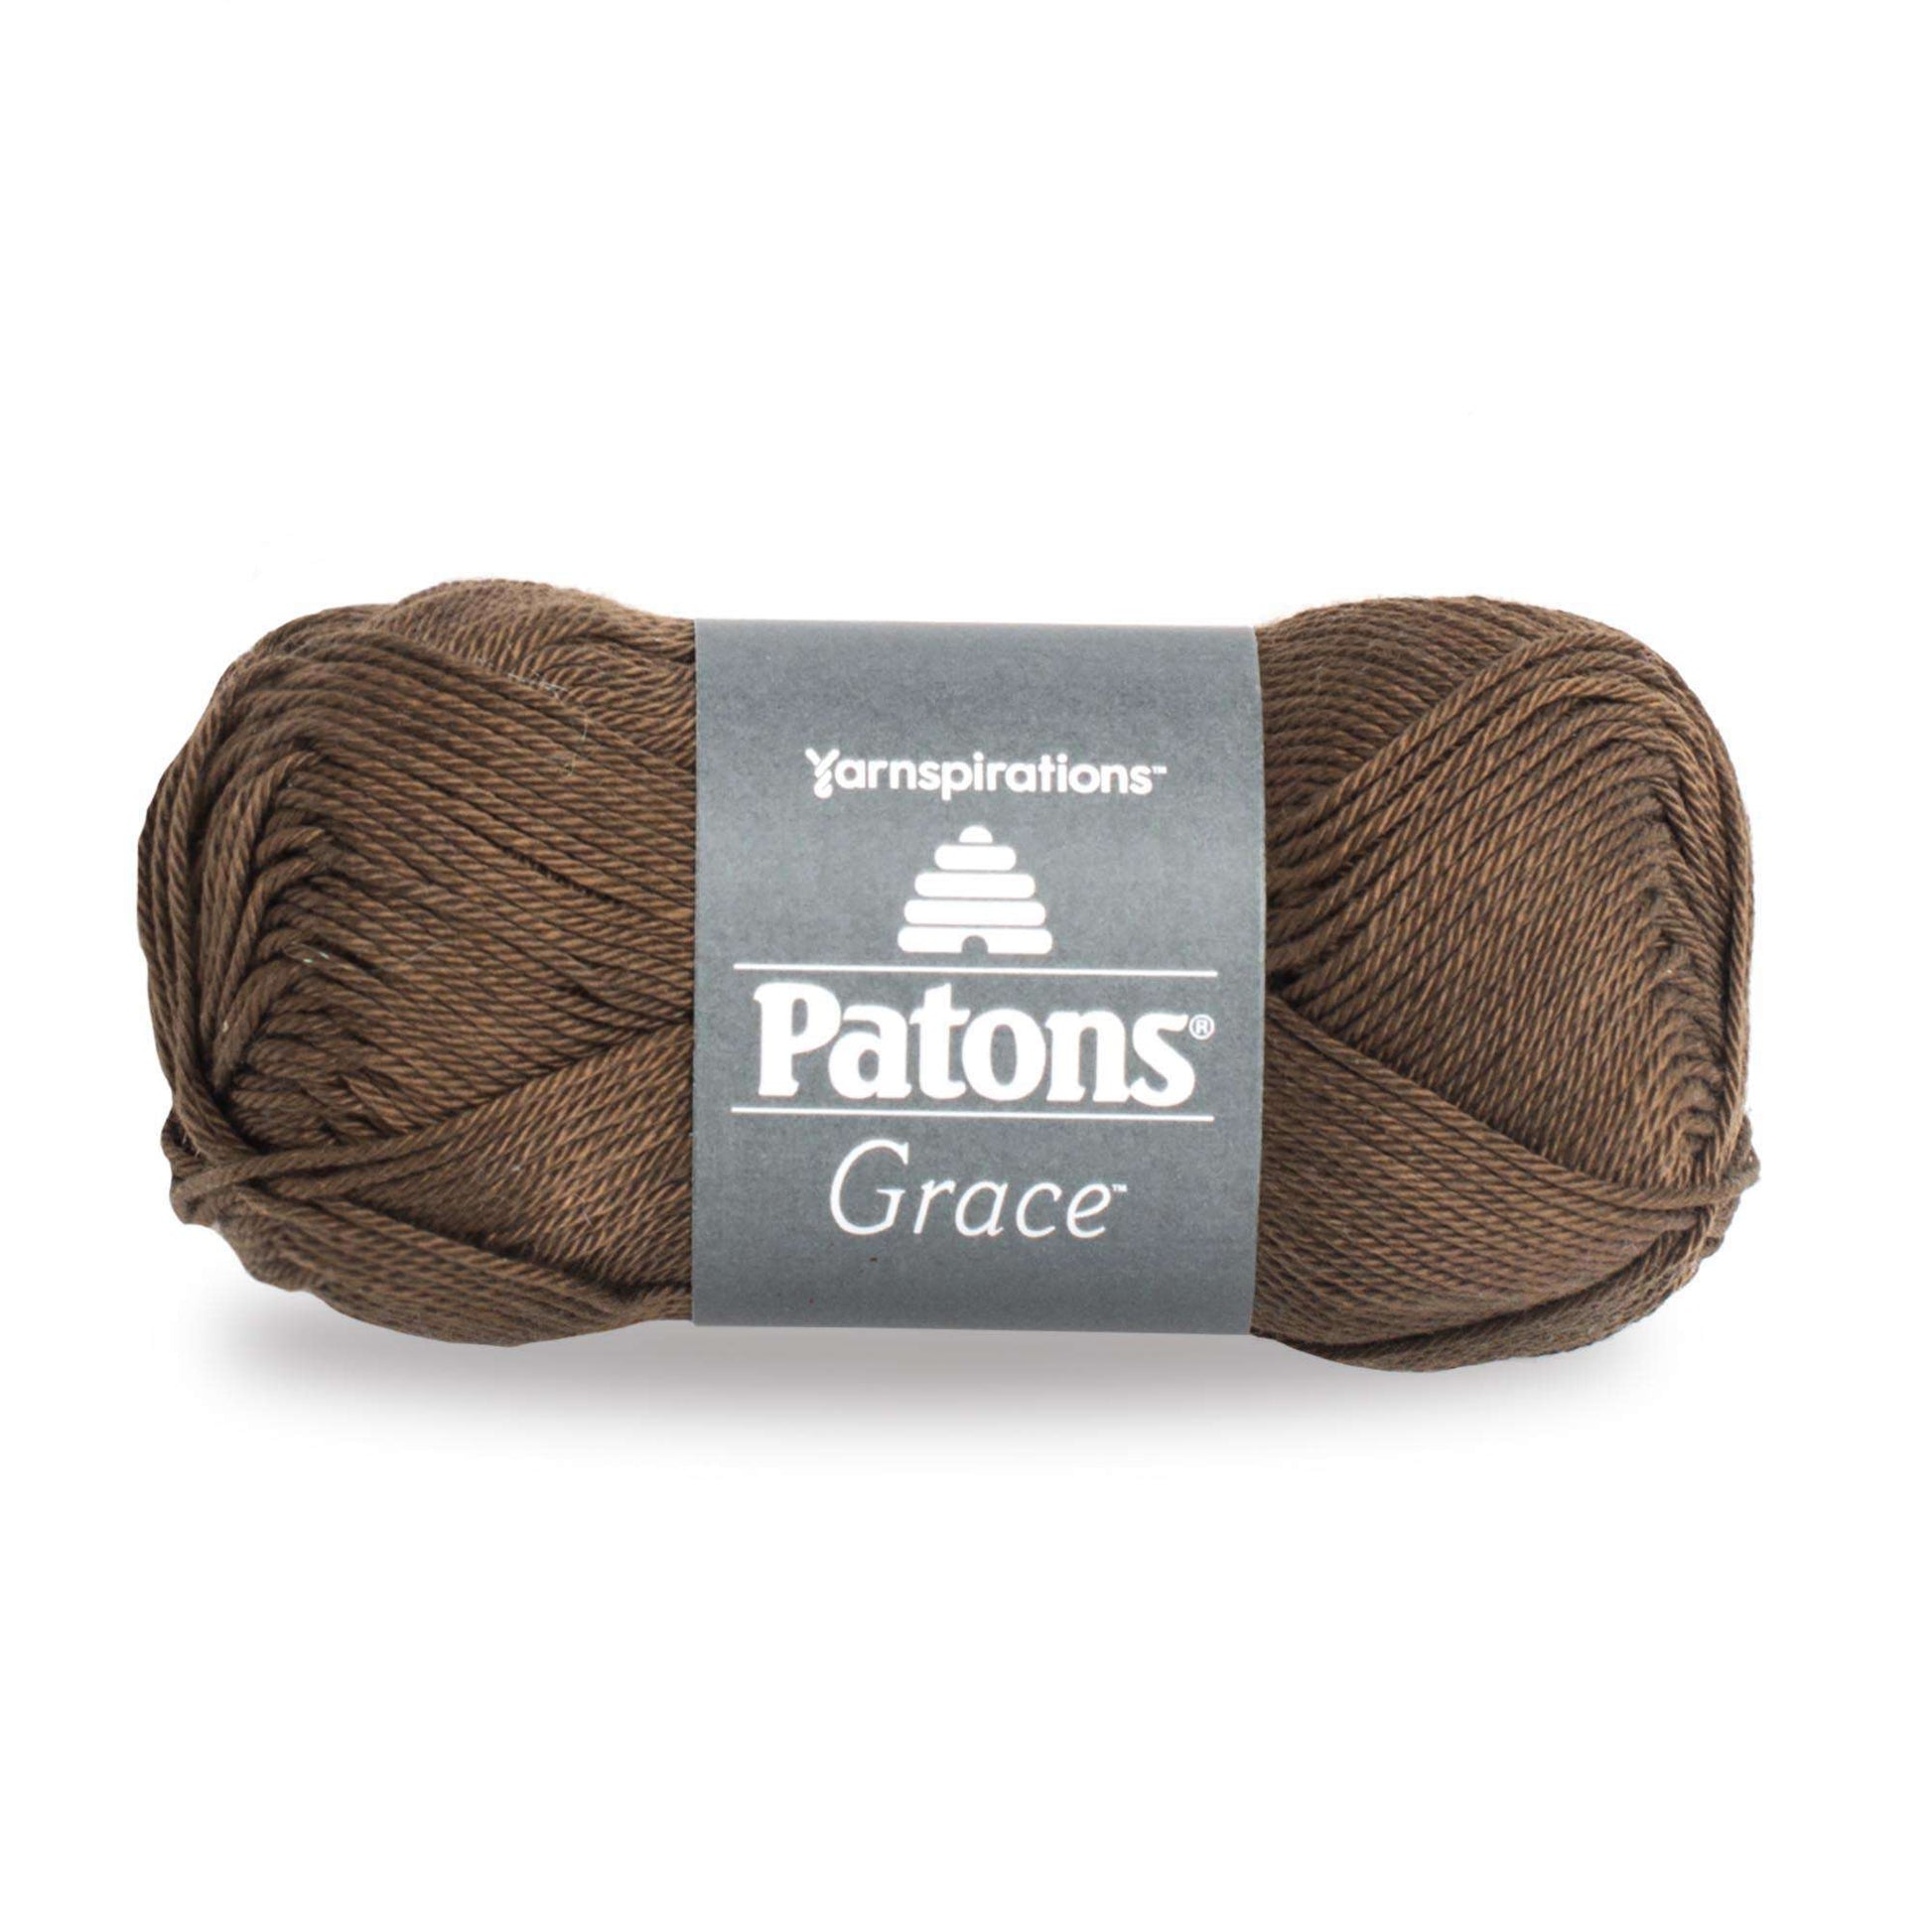 Patons Grace Yarn - Discontinued Shades